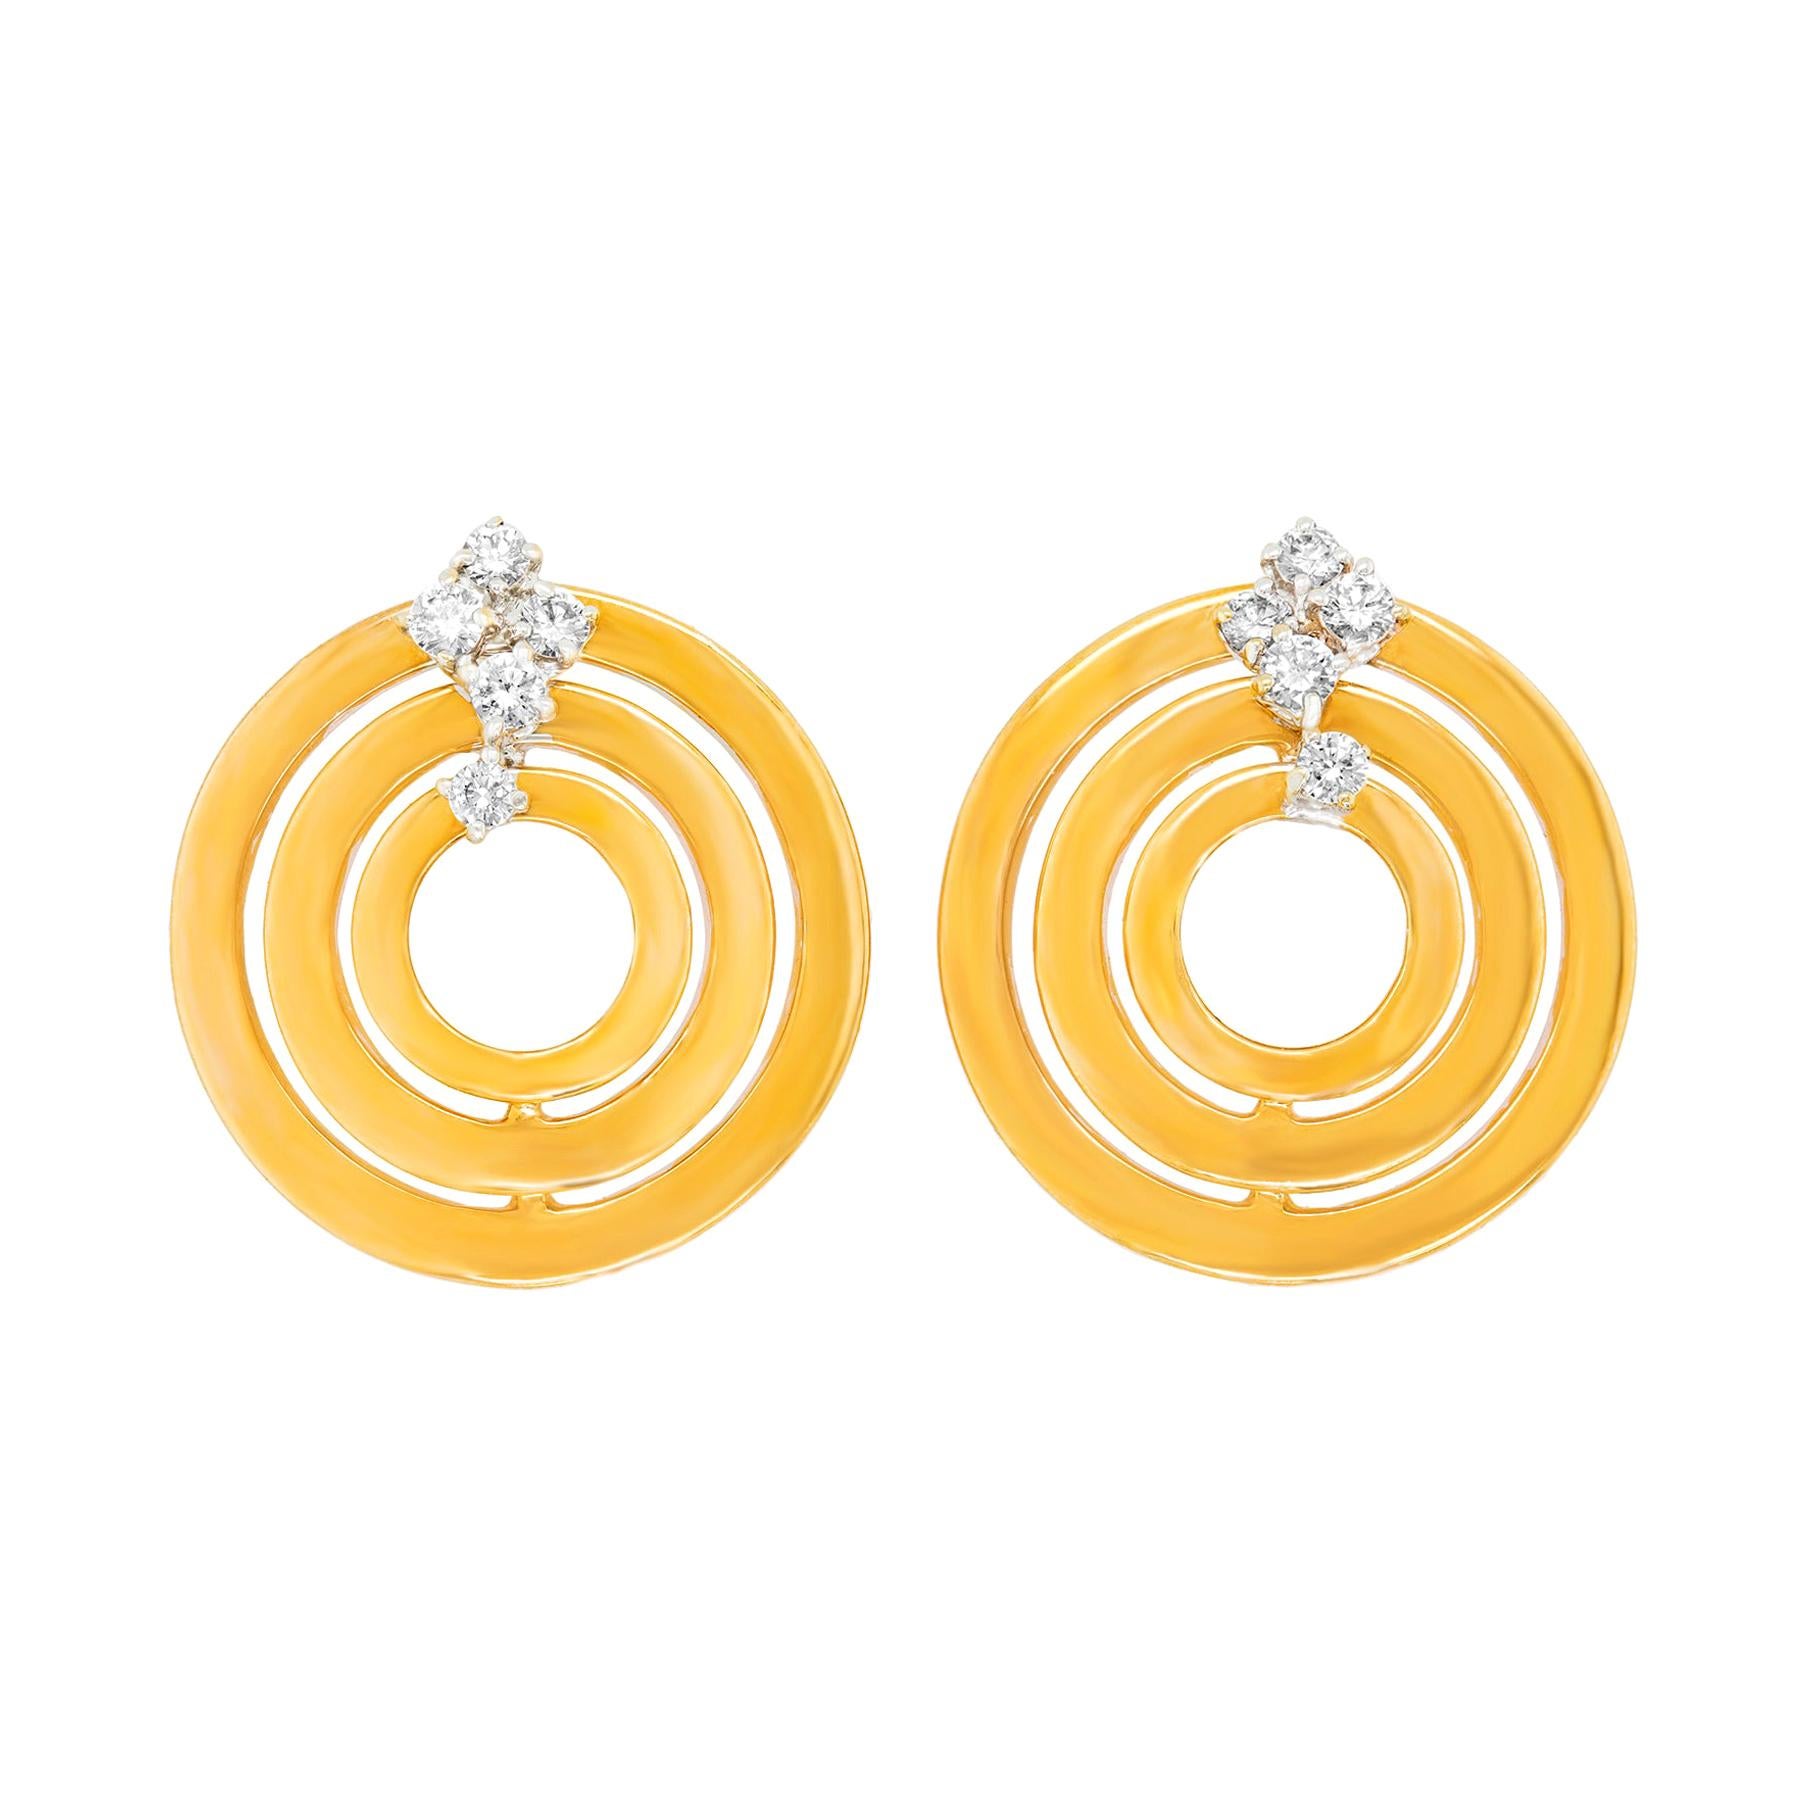 Damiani Contemporary Diamond-Set Gold Earrings